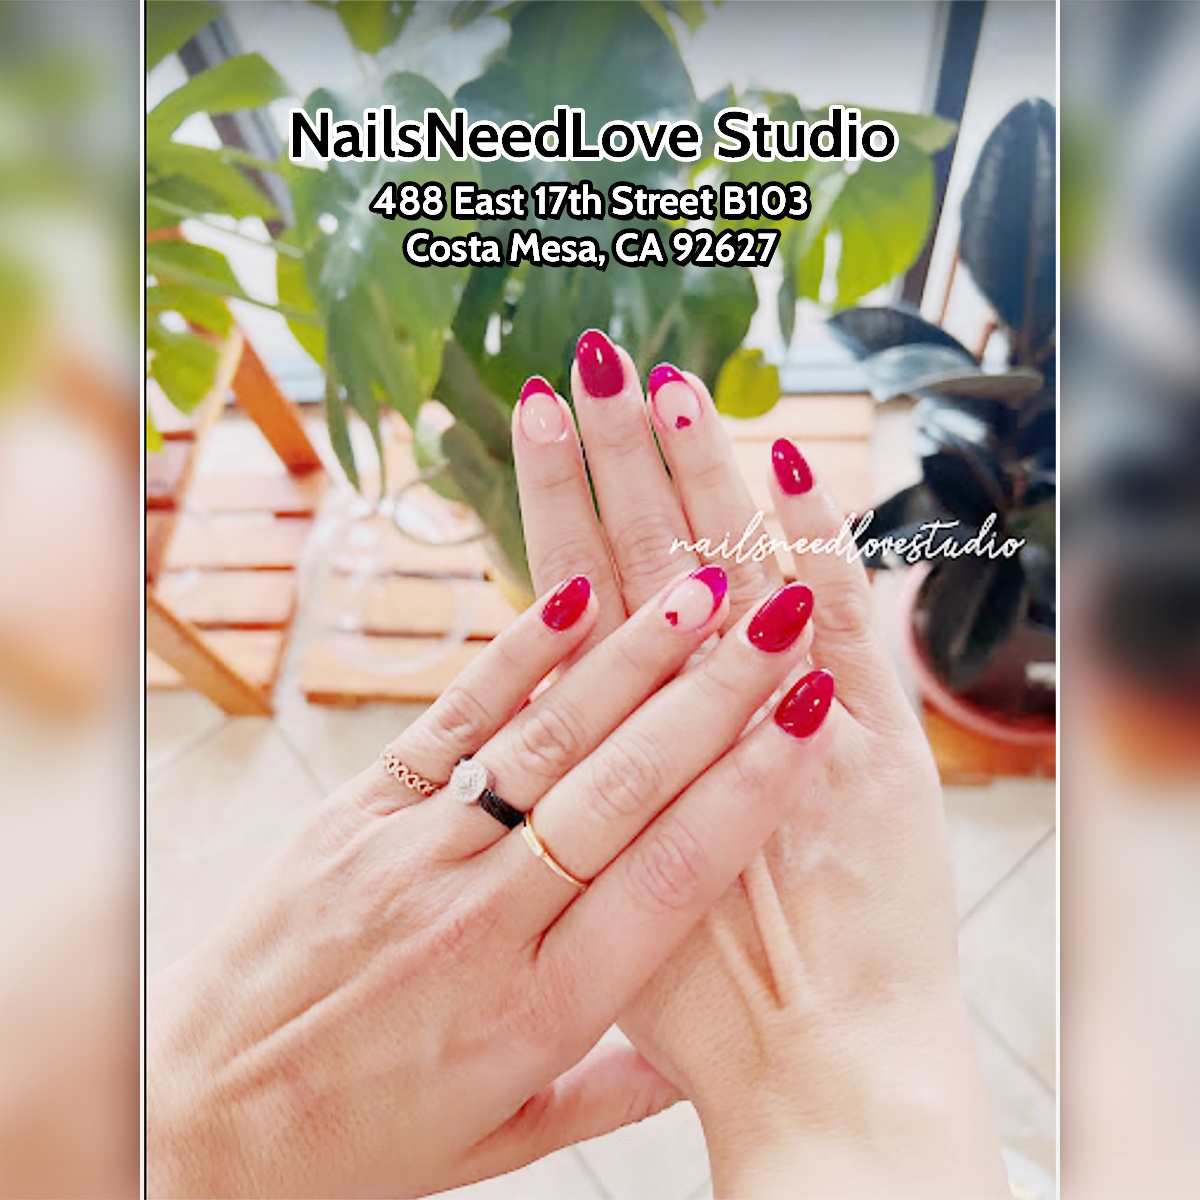 NailsNeedLove Studio – Nail salon in Costa Mesa, CA 92627